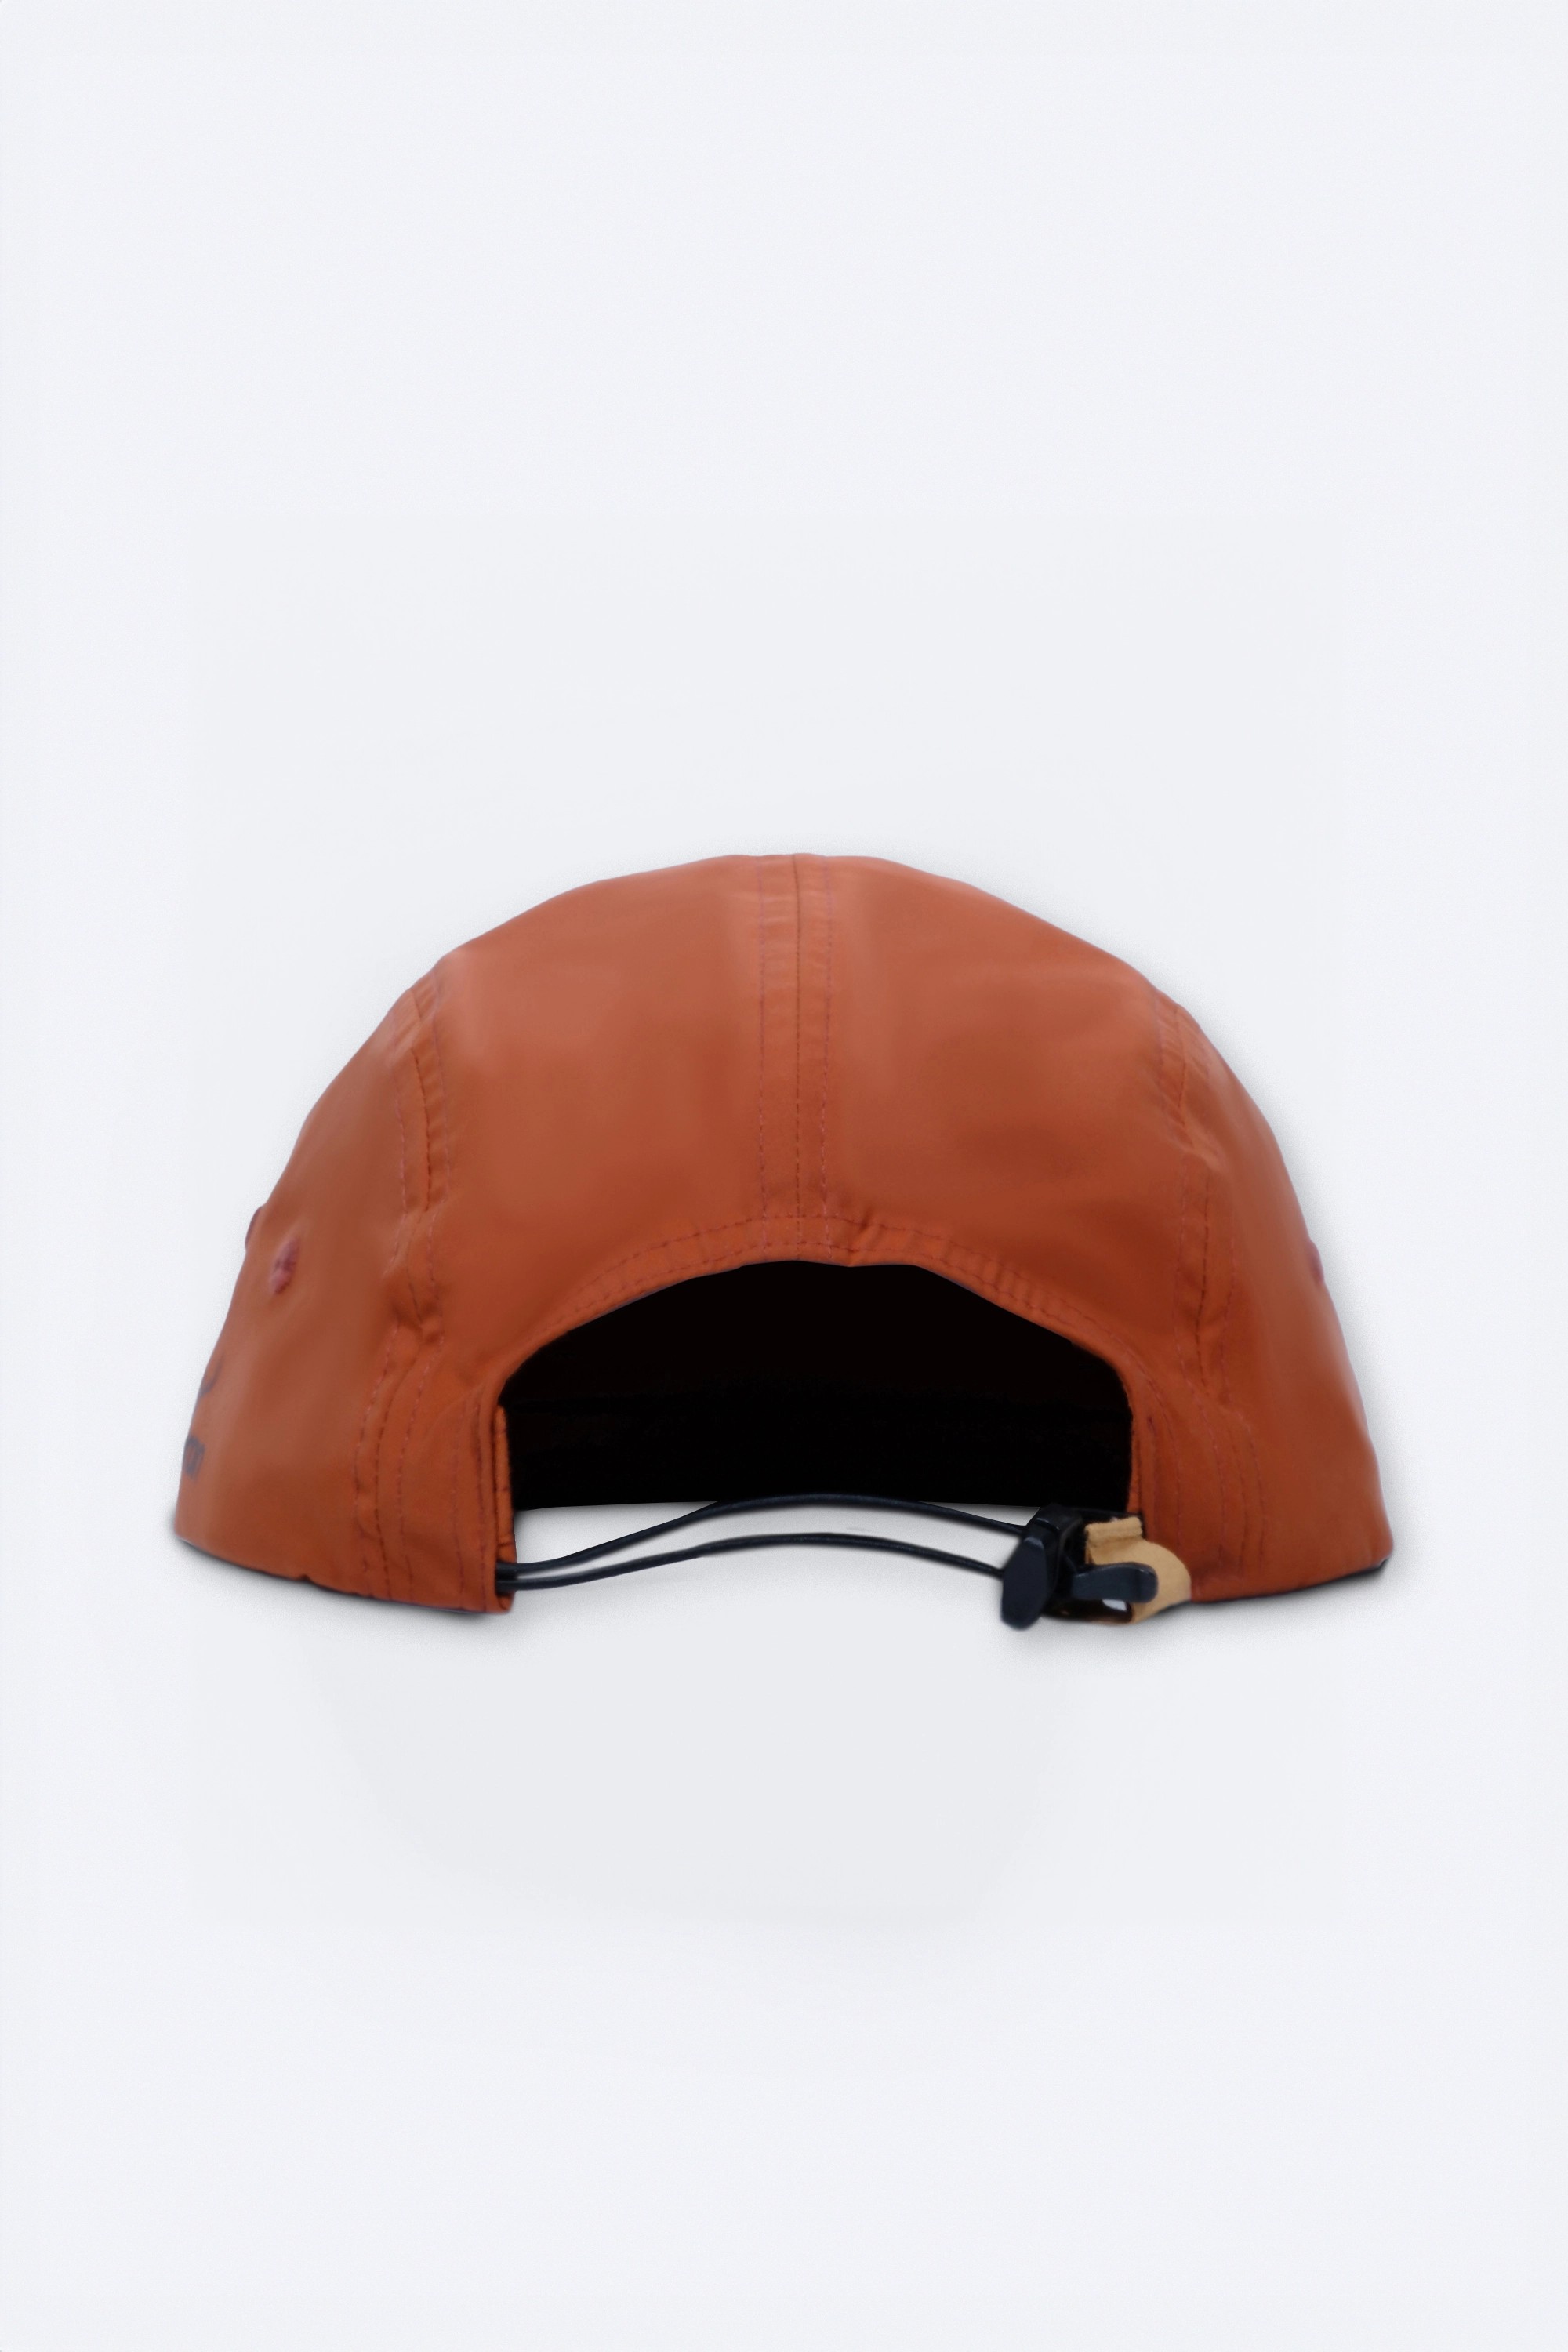 Picton Camper Ayarlanabilir Snapback Şapka